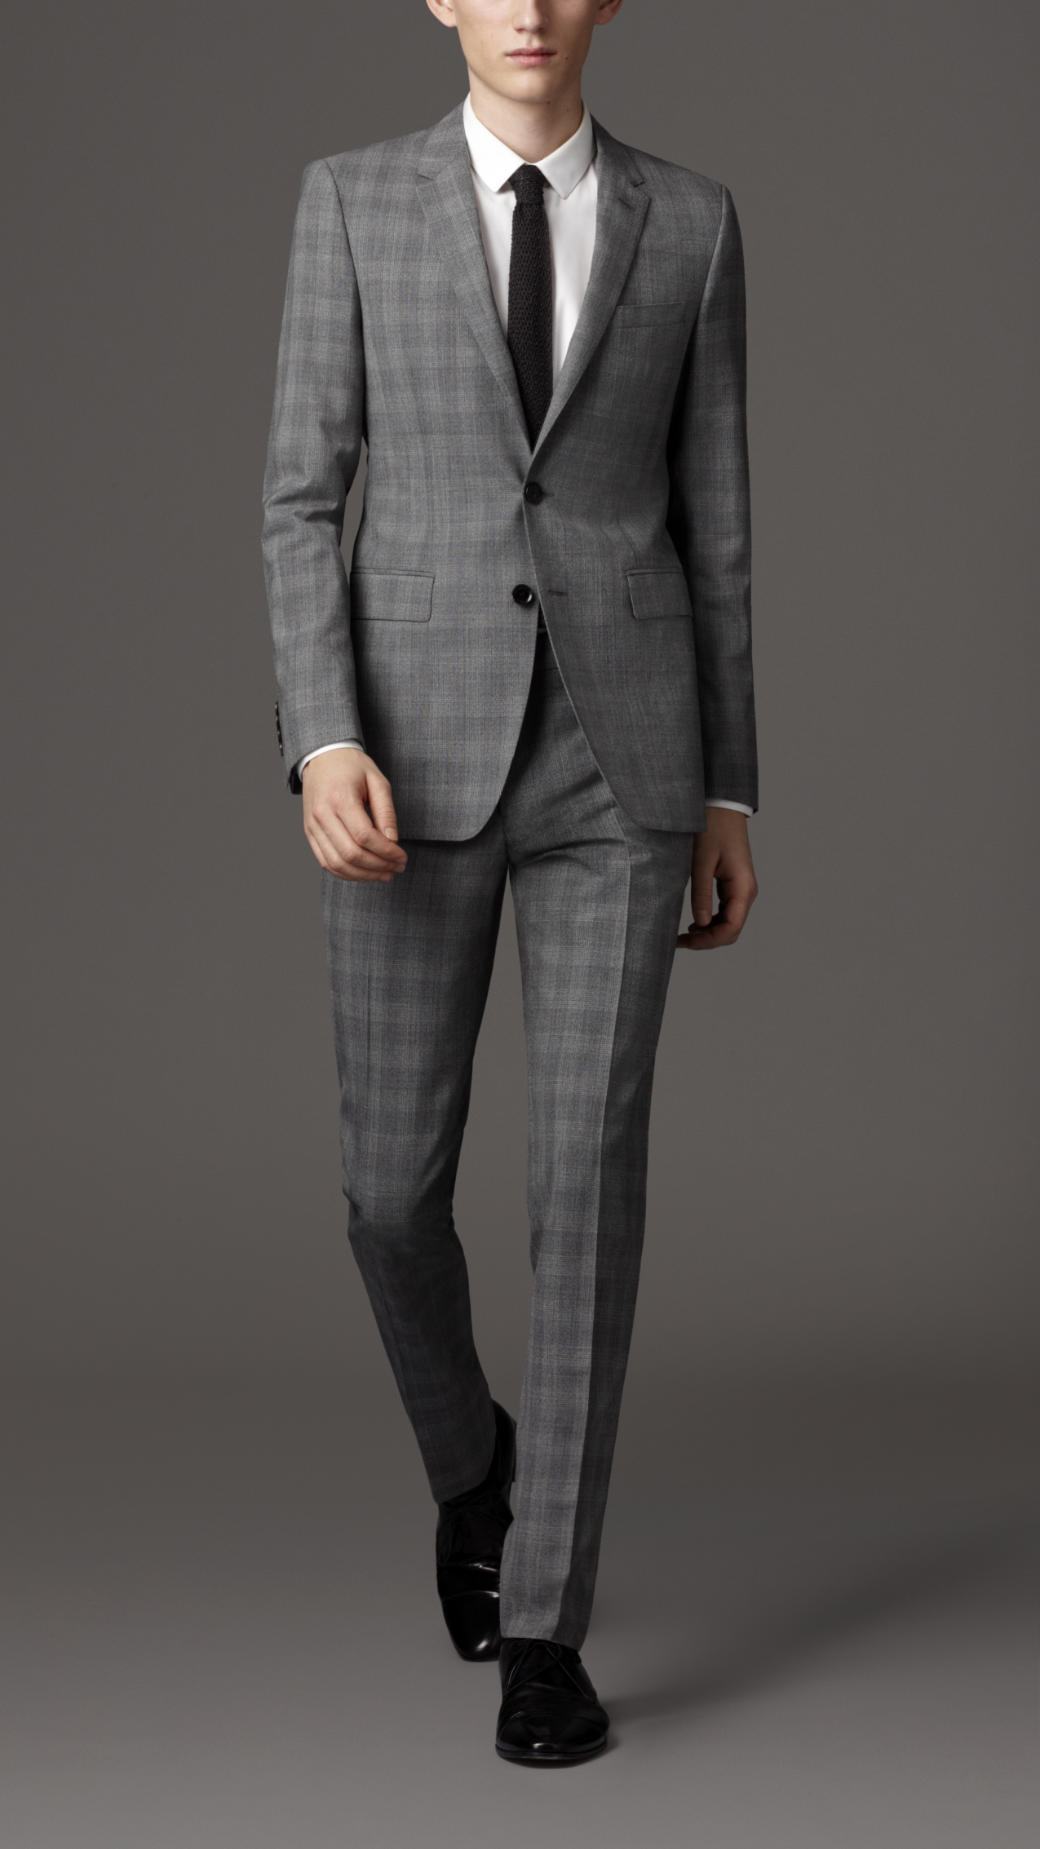 Burberry Slim Fit Virgin Wool Check Suit in Grey Melange (Gray) for Men - Lyst